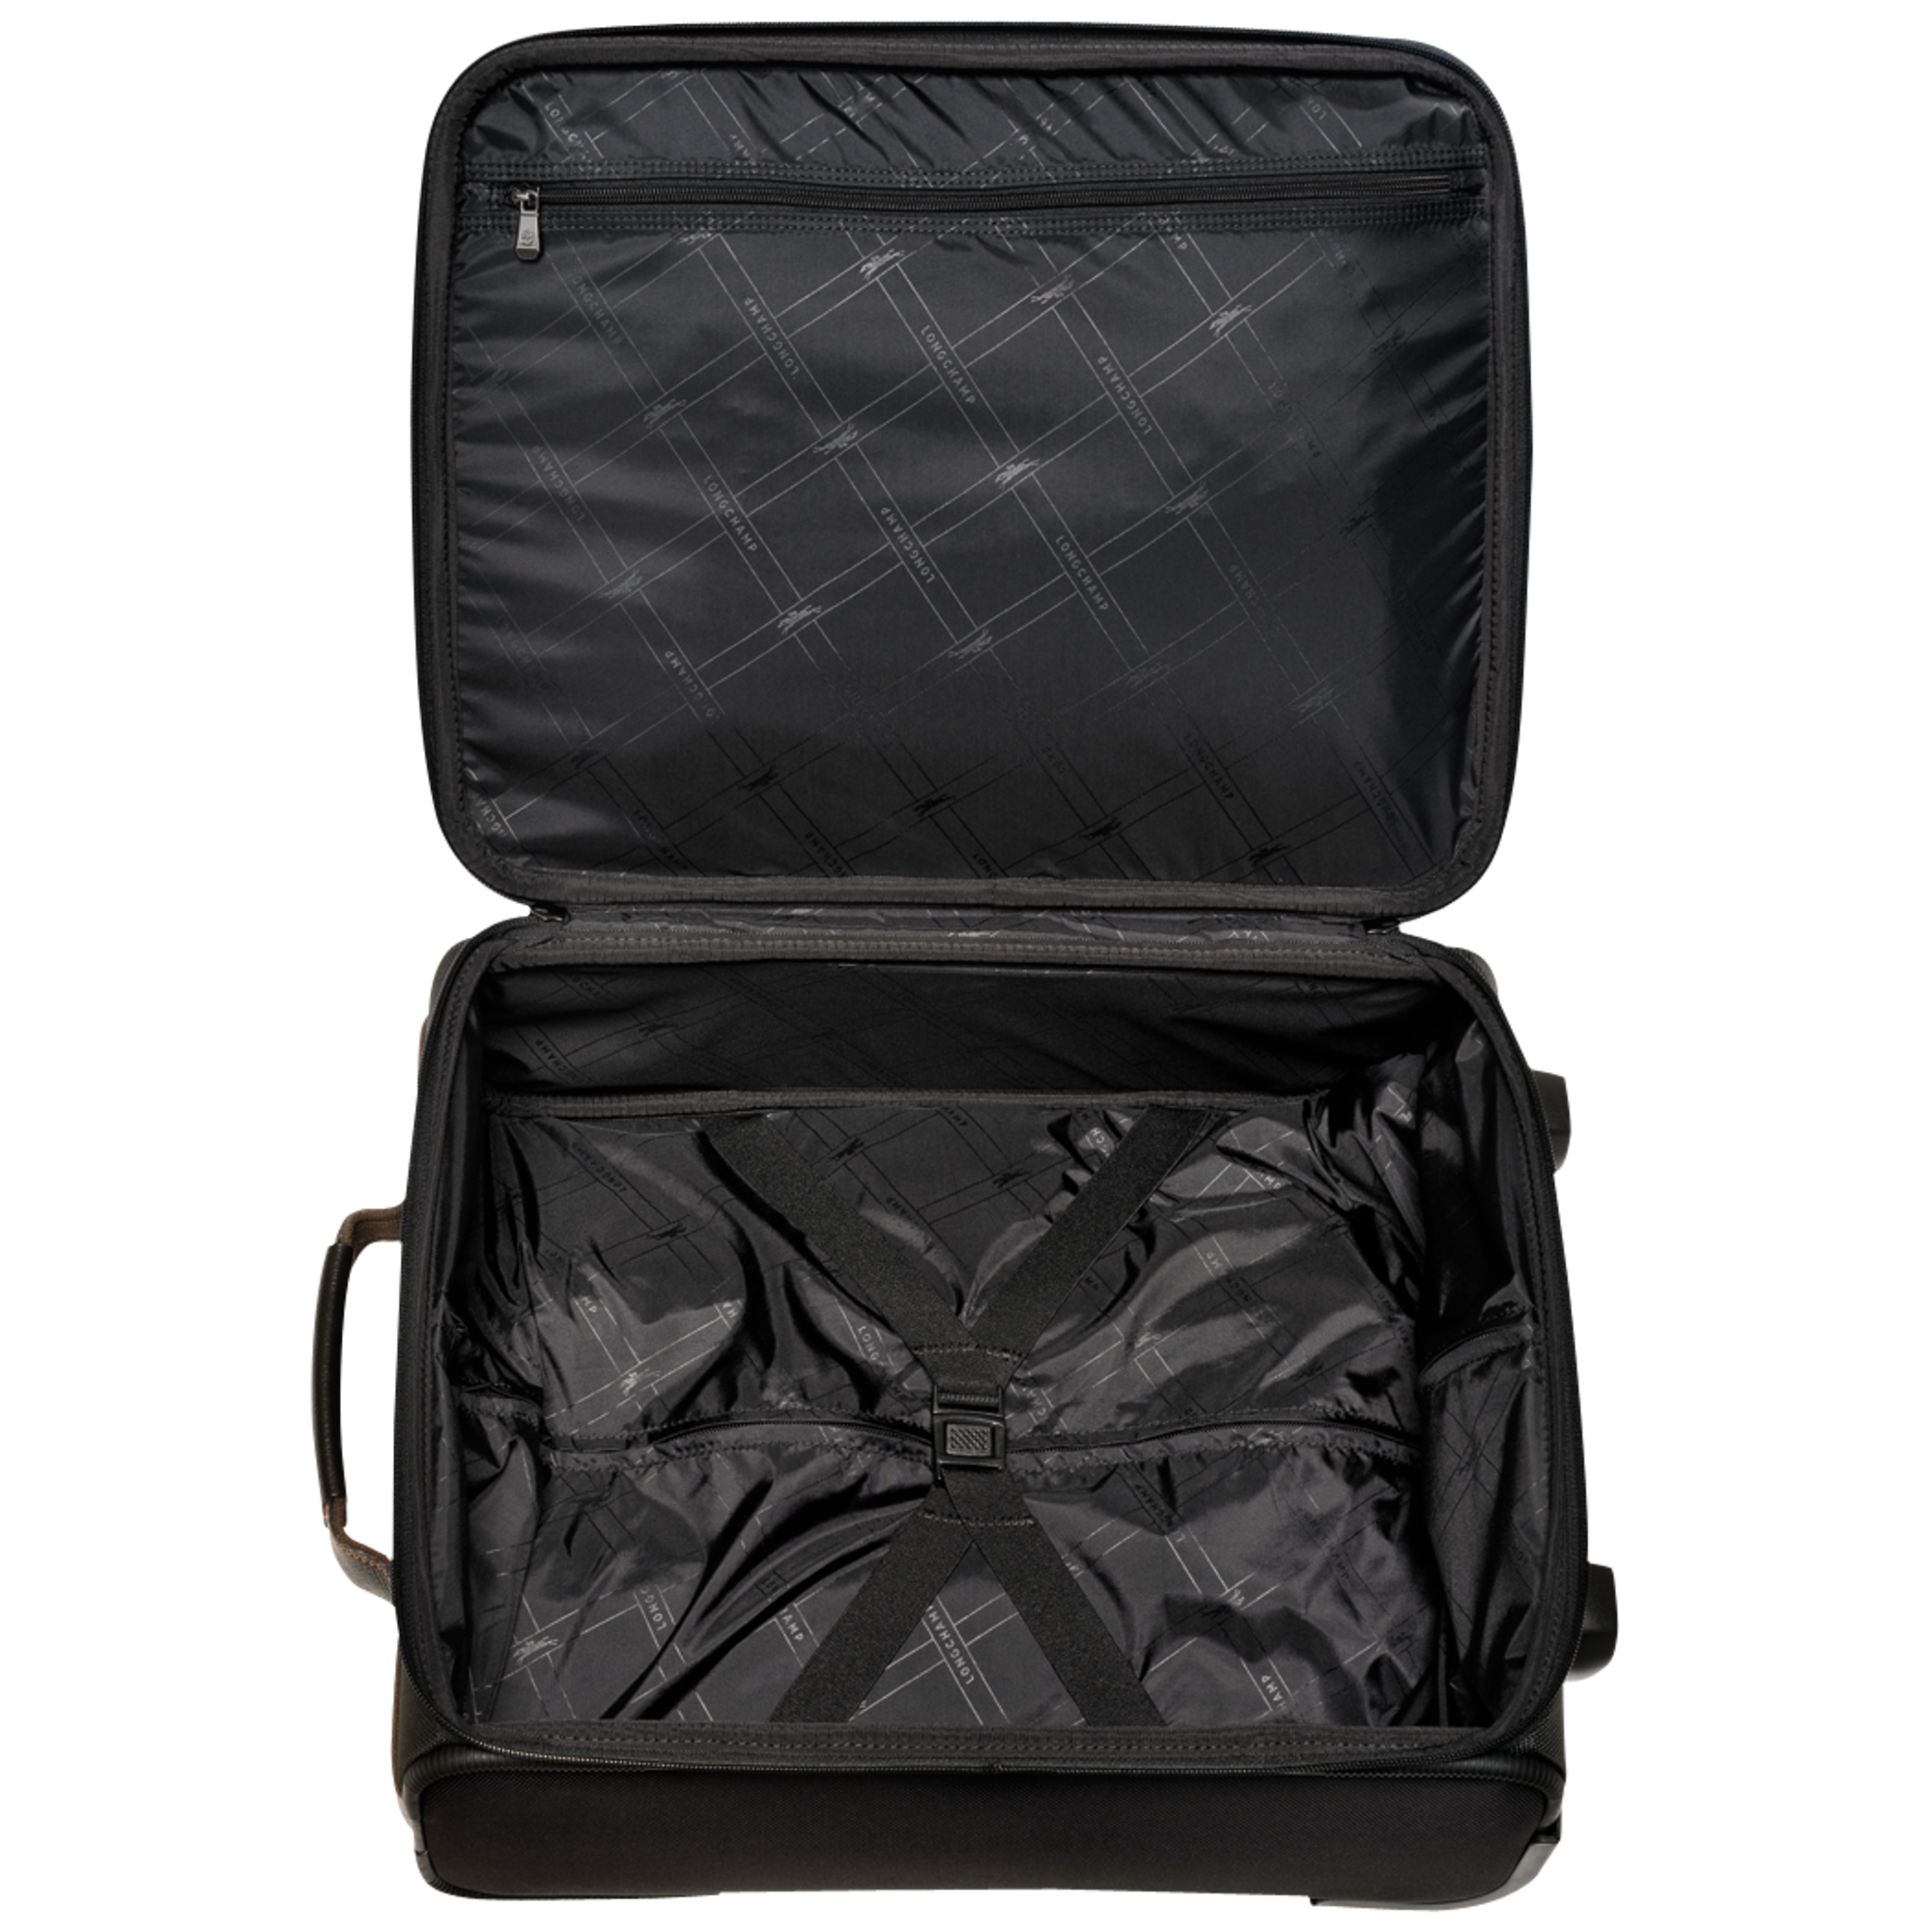 Boxford Suitcase S, Black